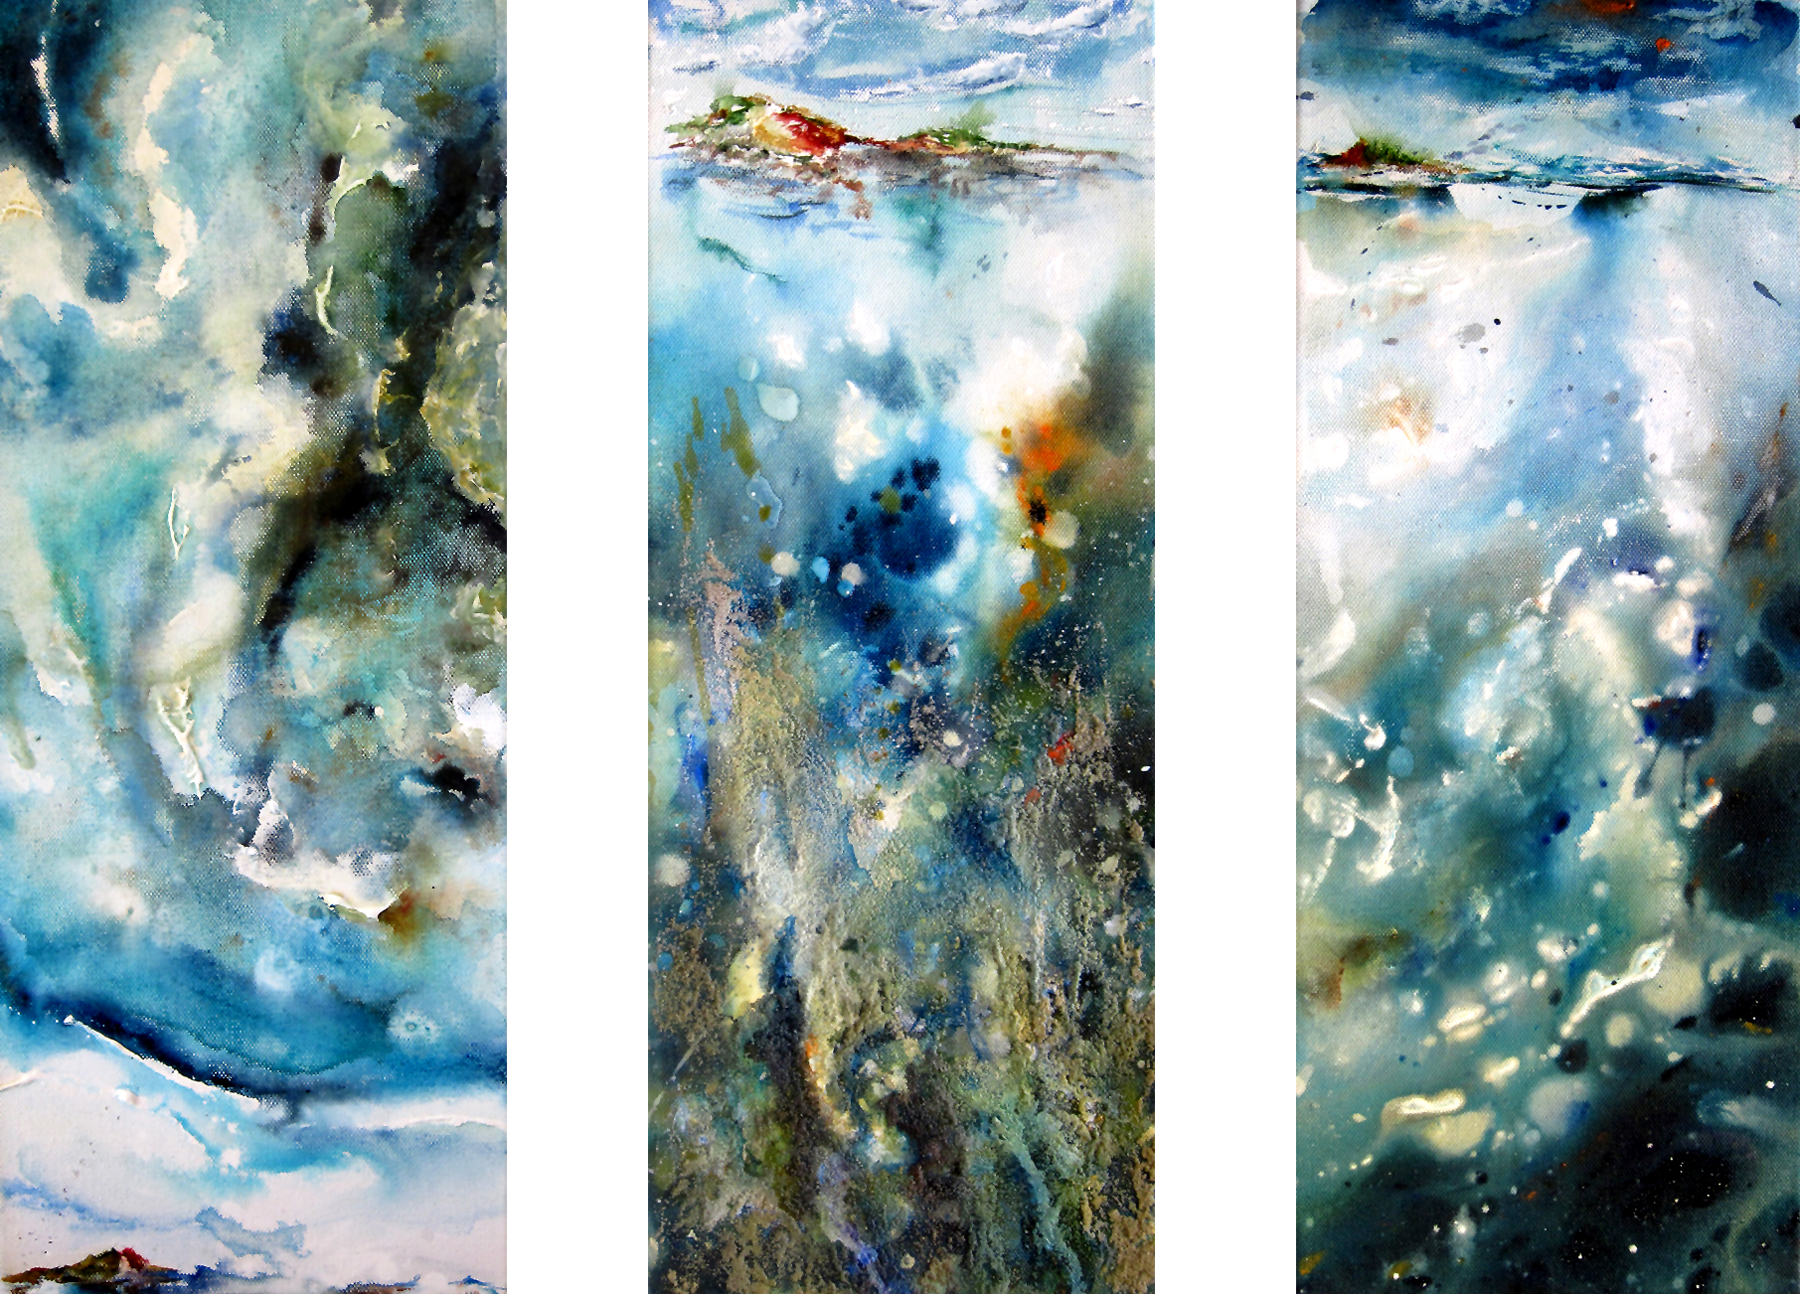 Deep Blue Sea #1-3 Acryl Aquarell 20 x 50